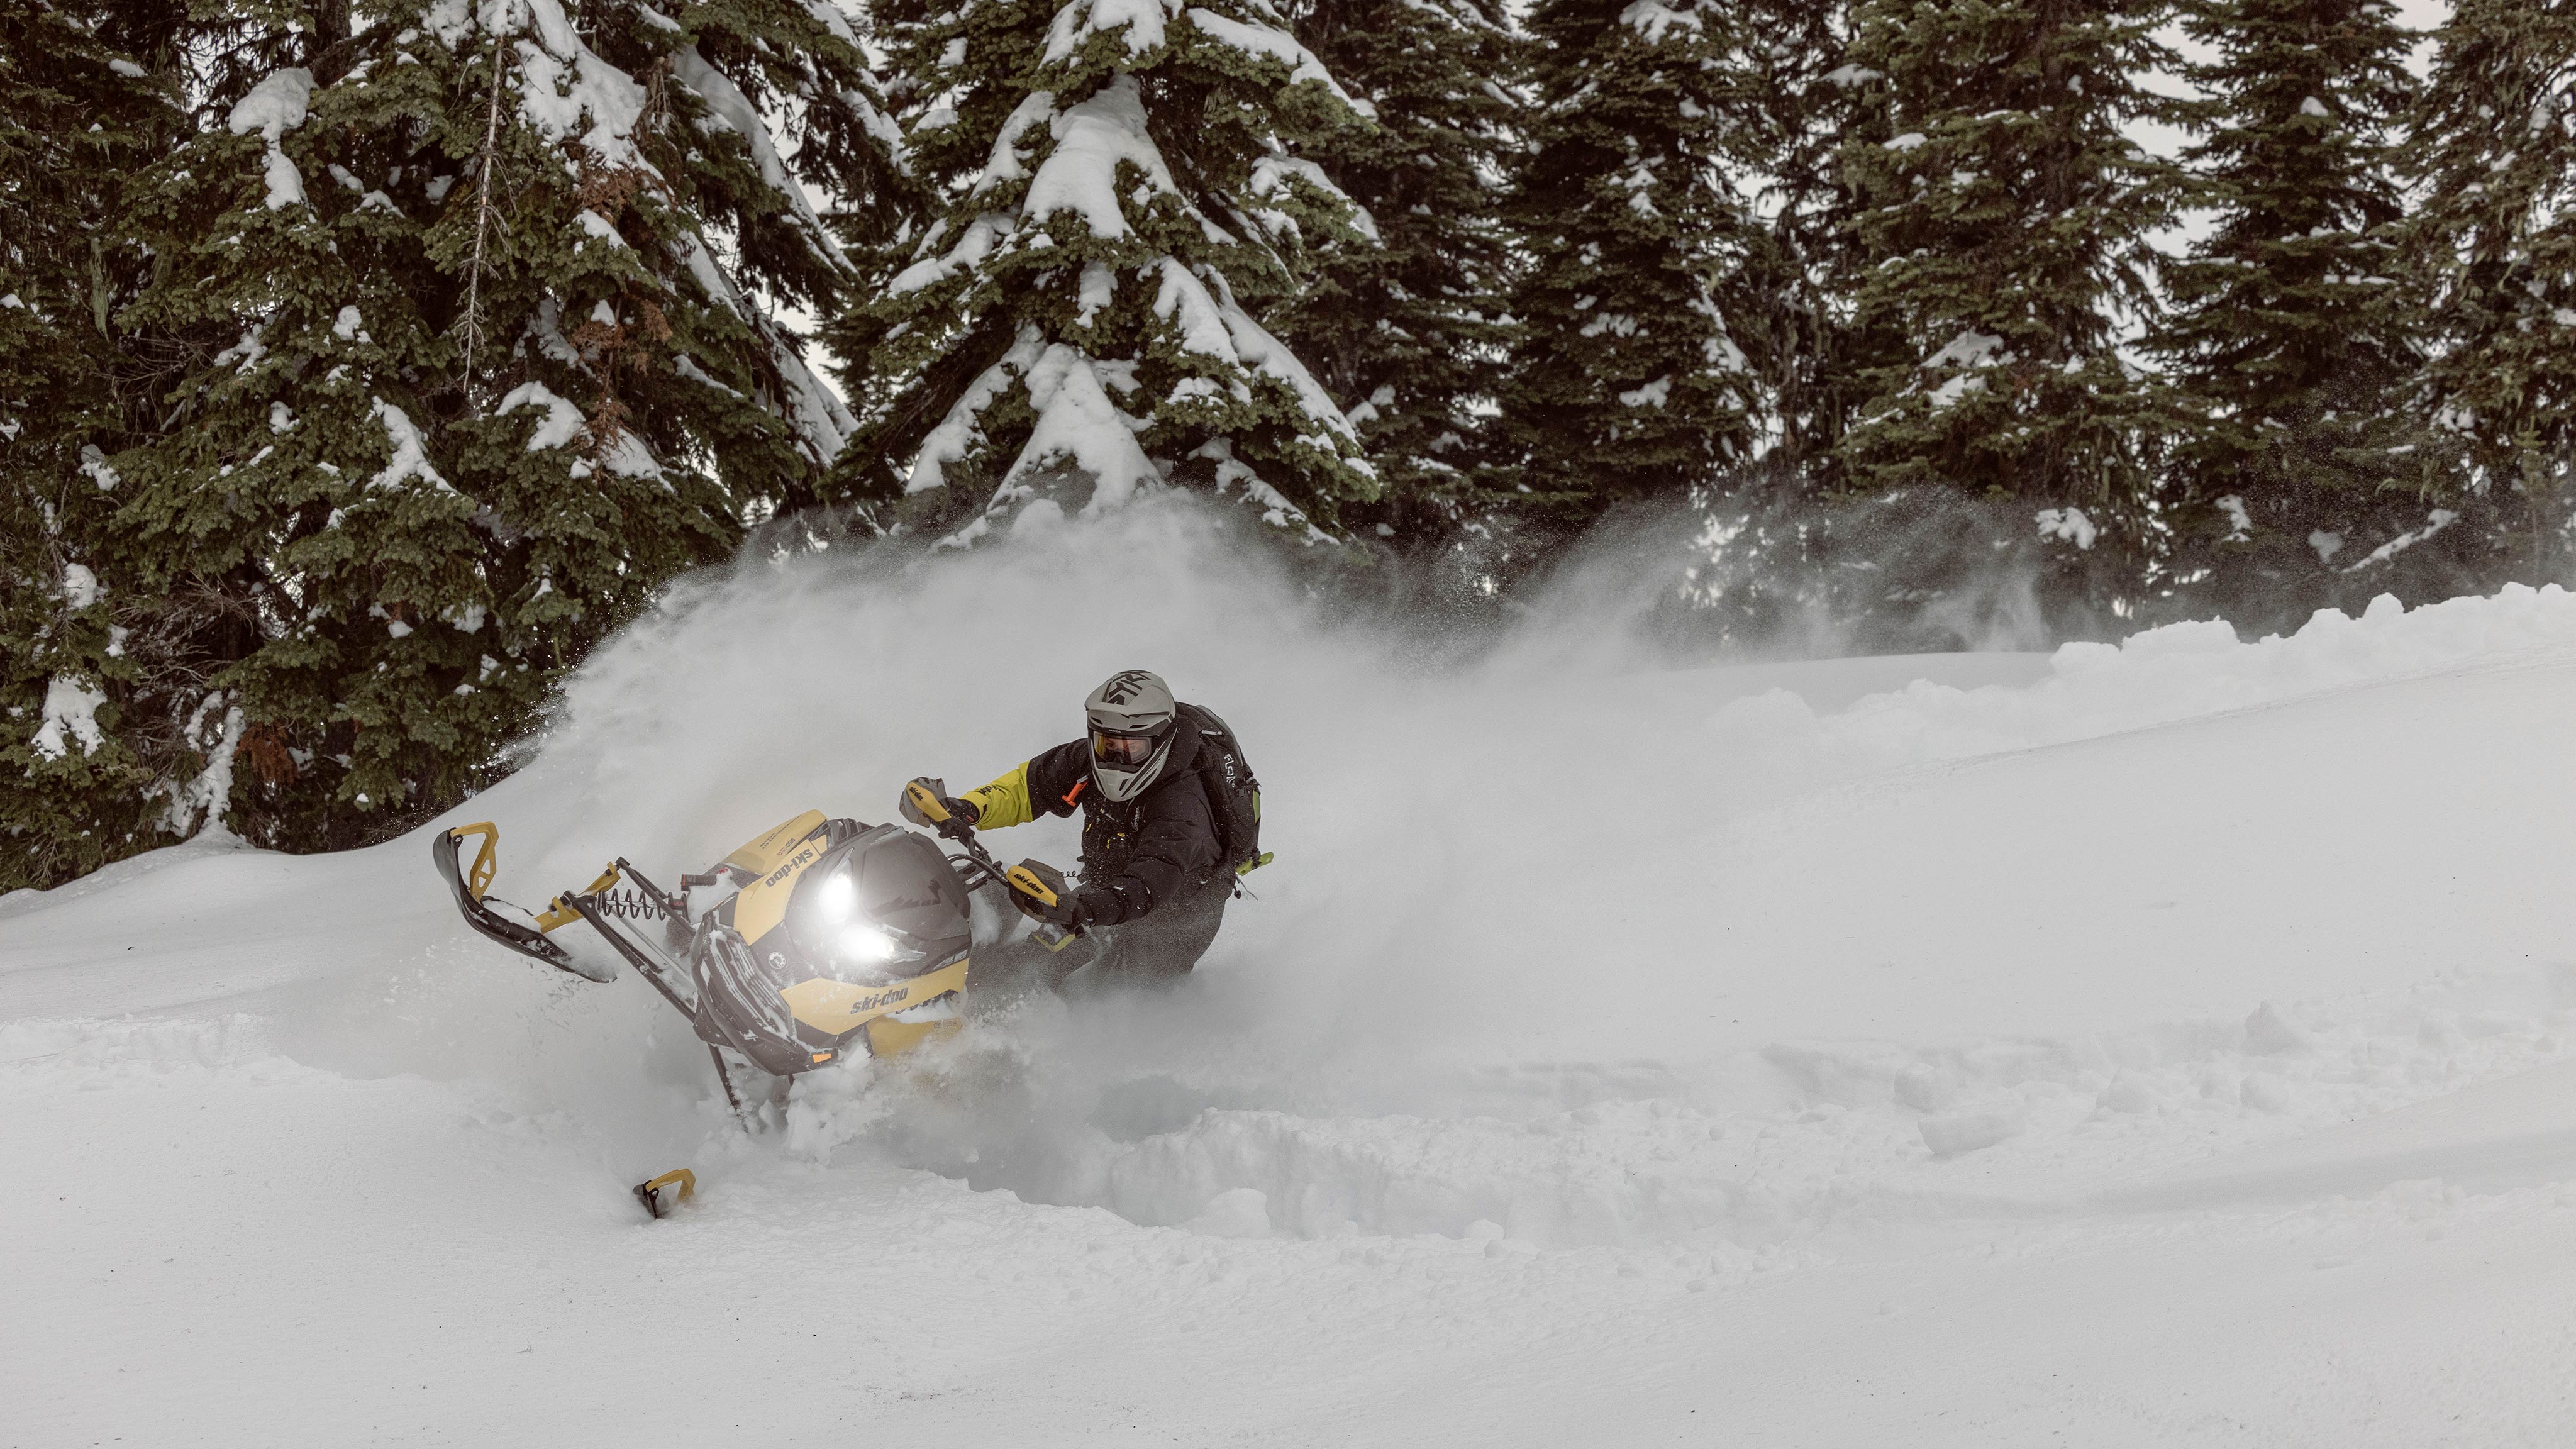 2025 Ski-Doo Backcountry Crossover snowmobile riding in deep snow